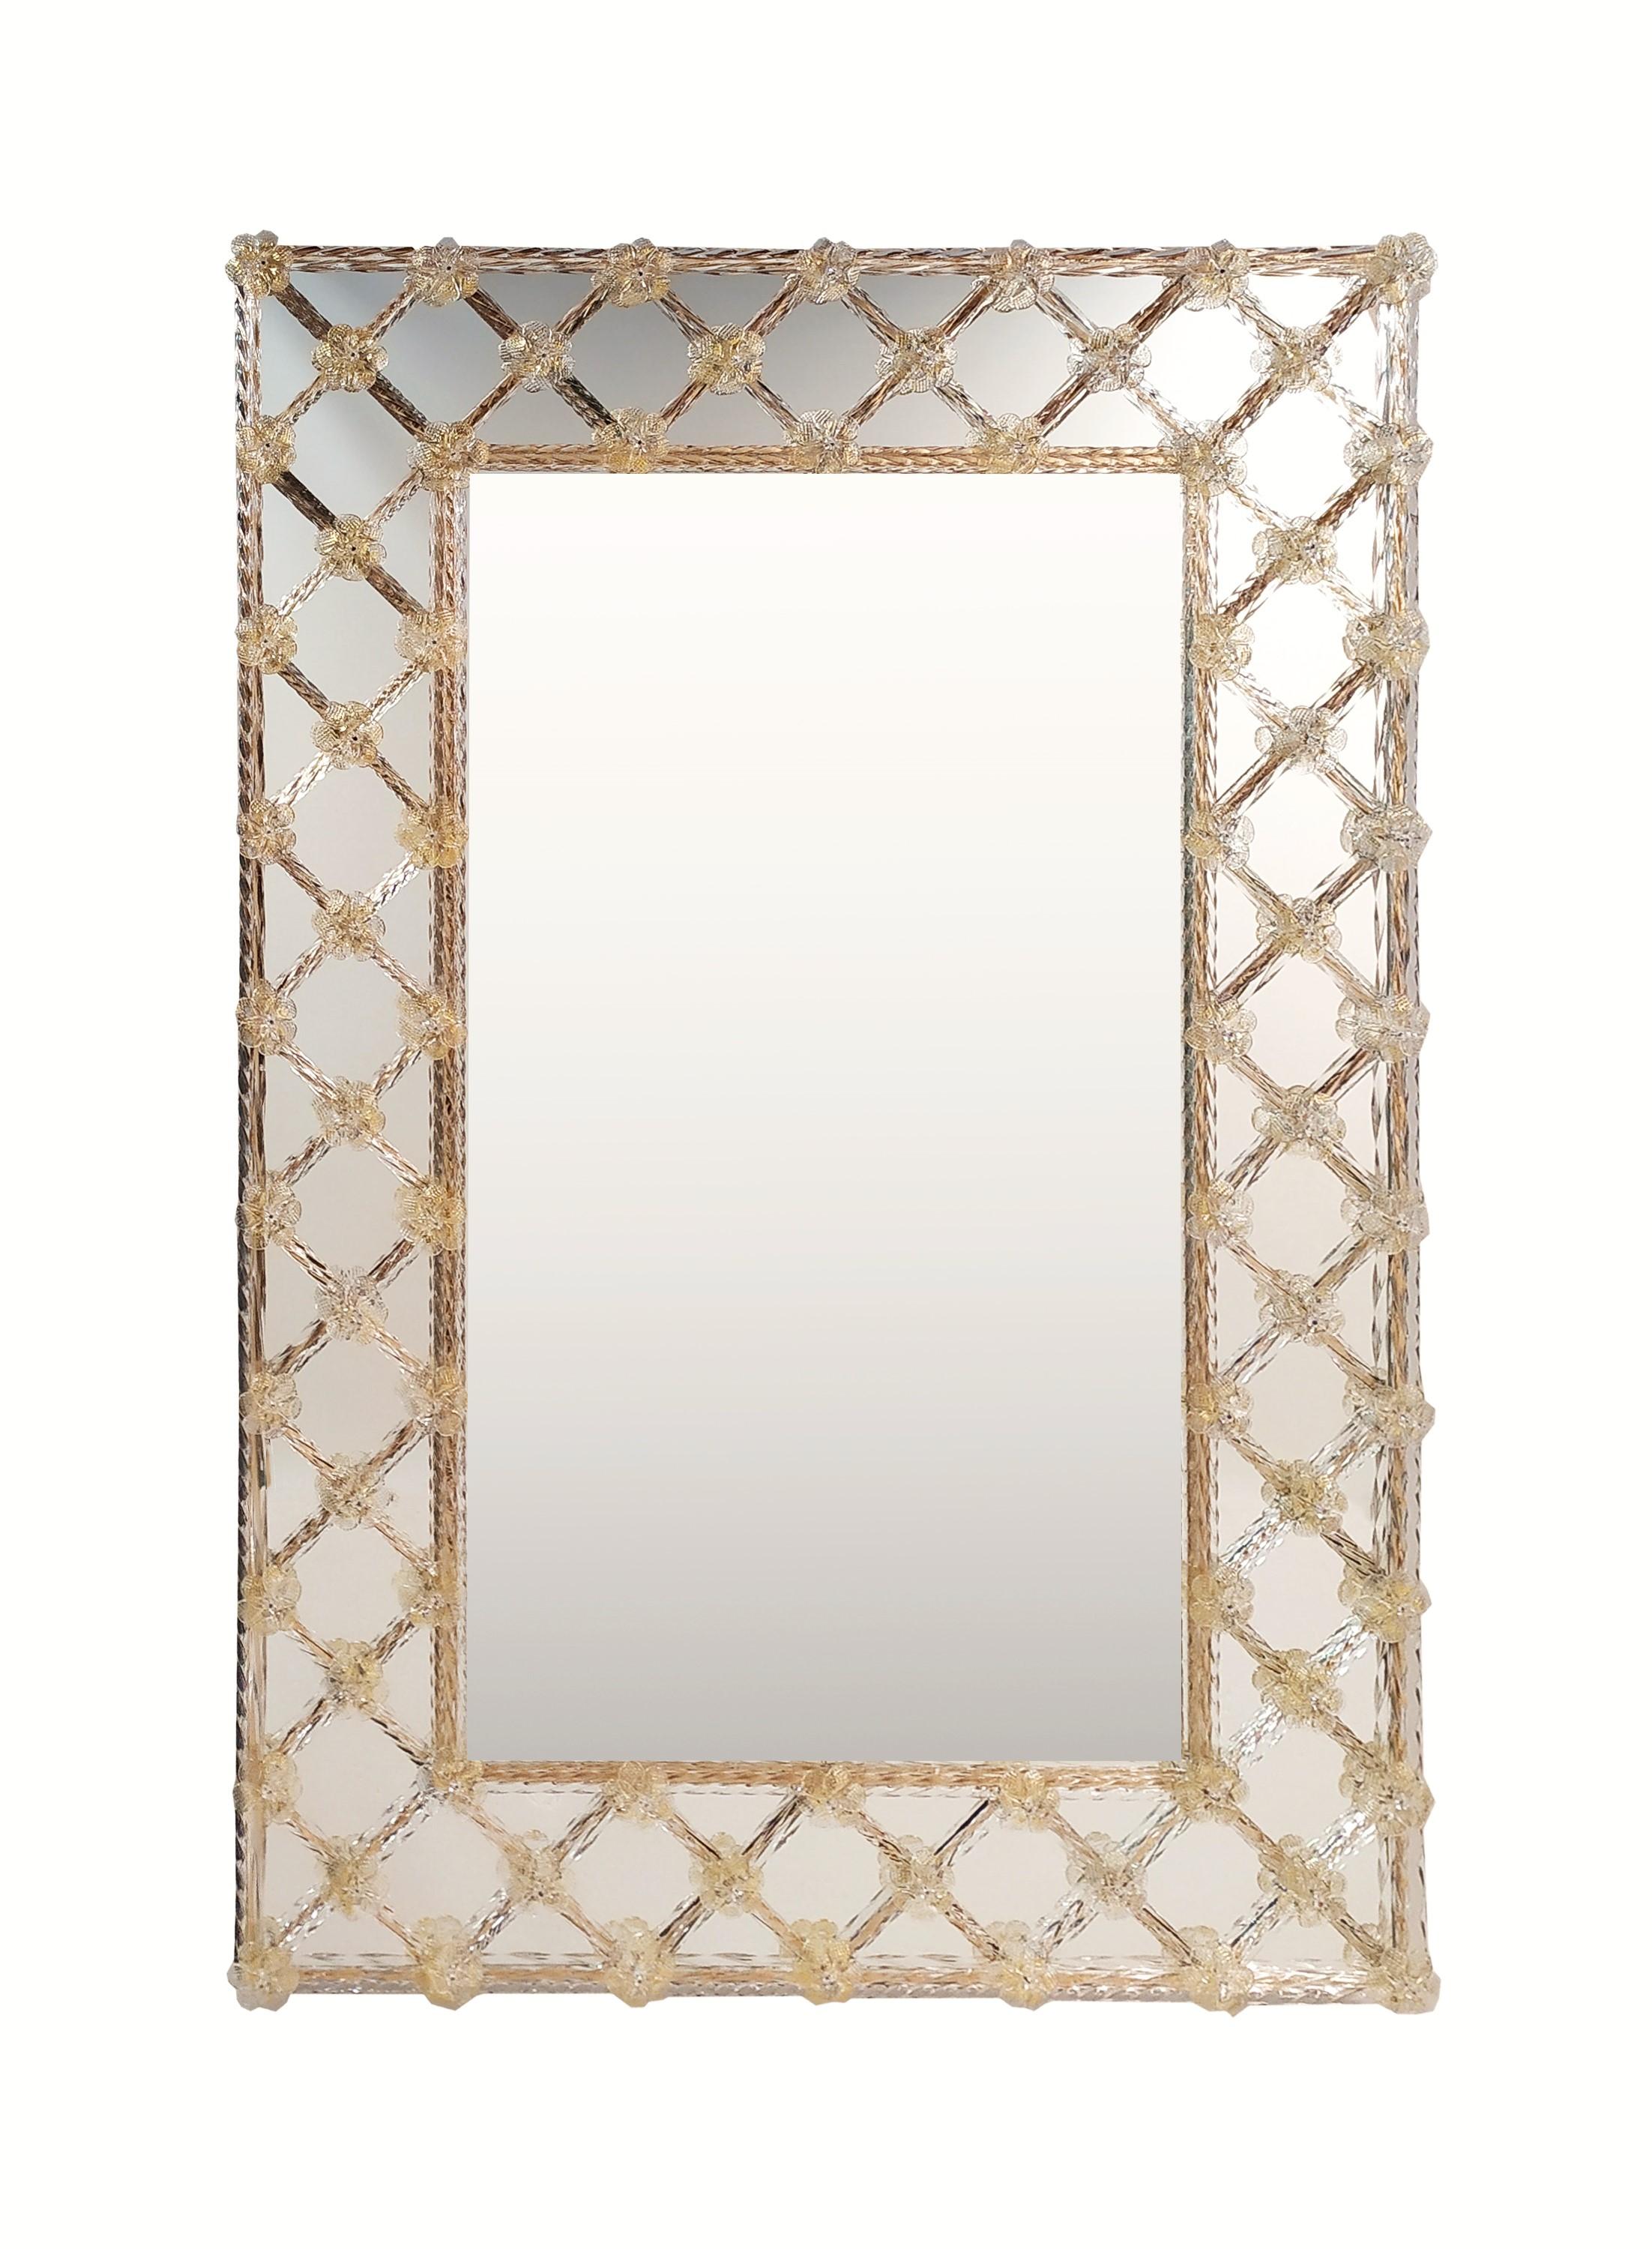 „CREME“ Specchio Veneziano in Vetro di Murano, von Fratelli Tosi, hergestellt in Italien